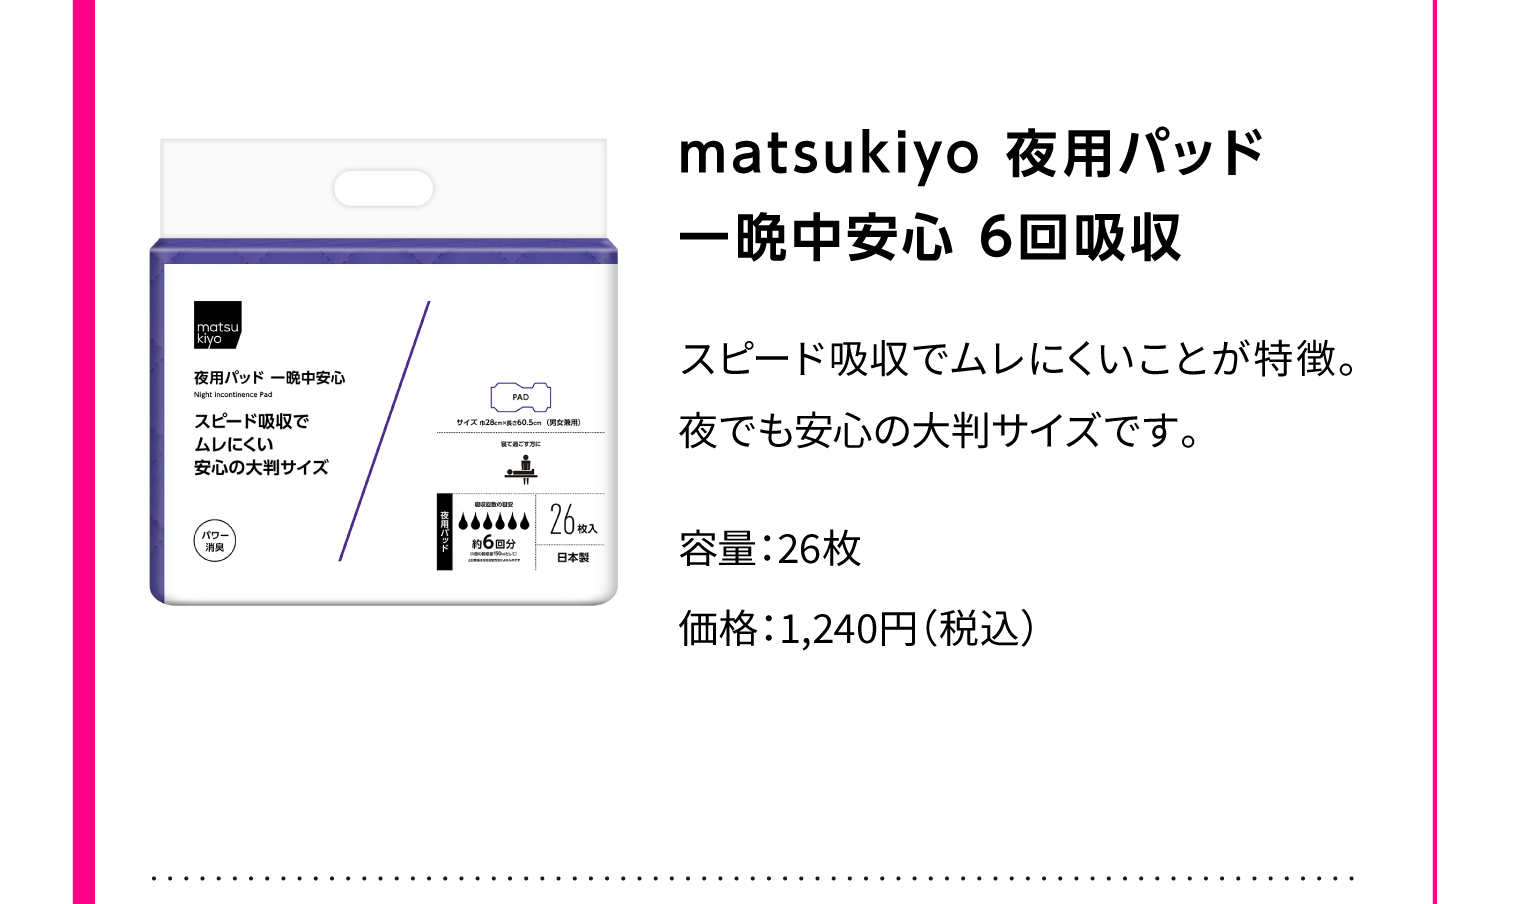 matsukiyo 夜用パッド 一晩中安心 6回吸収スピード吸収でムレにくいことが特徴。夜でも安心の大判サイズです。容量：26枚 価格：1,240円（税込）